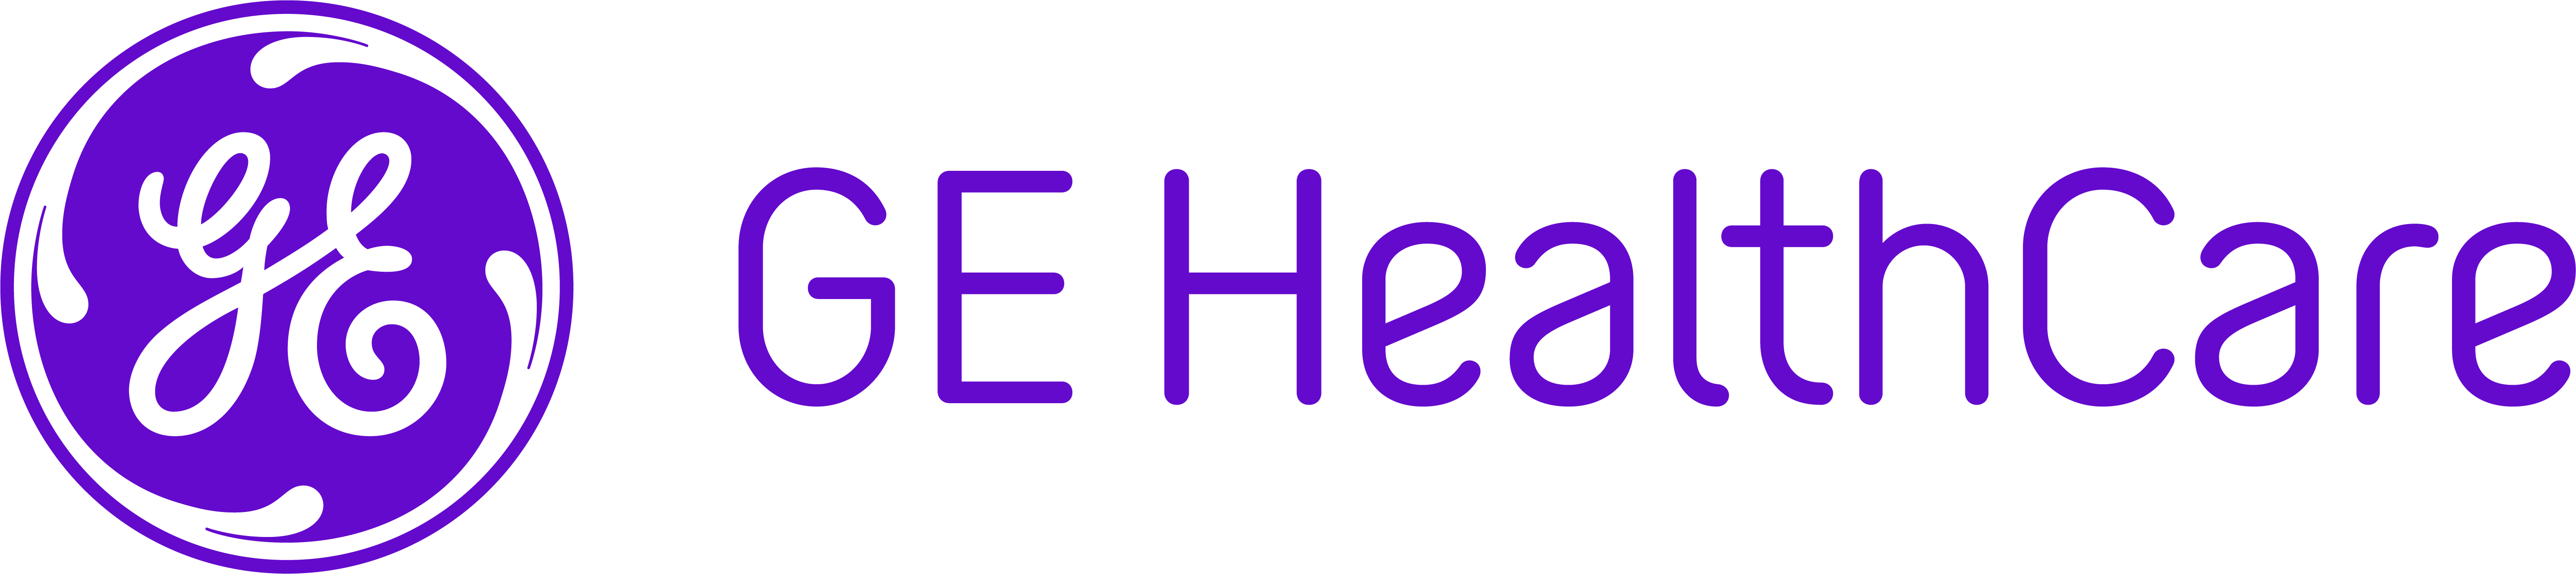 GE HEALTH CARE